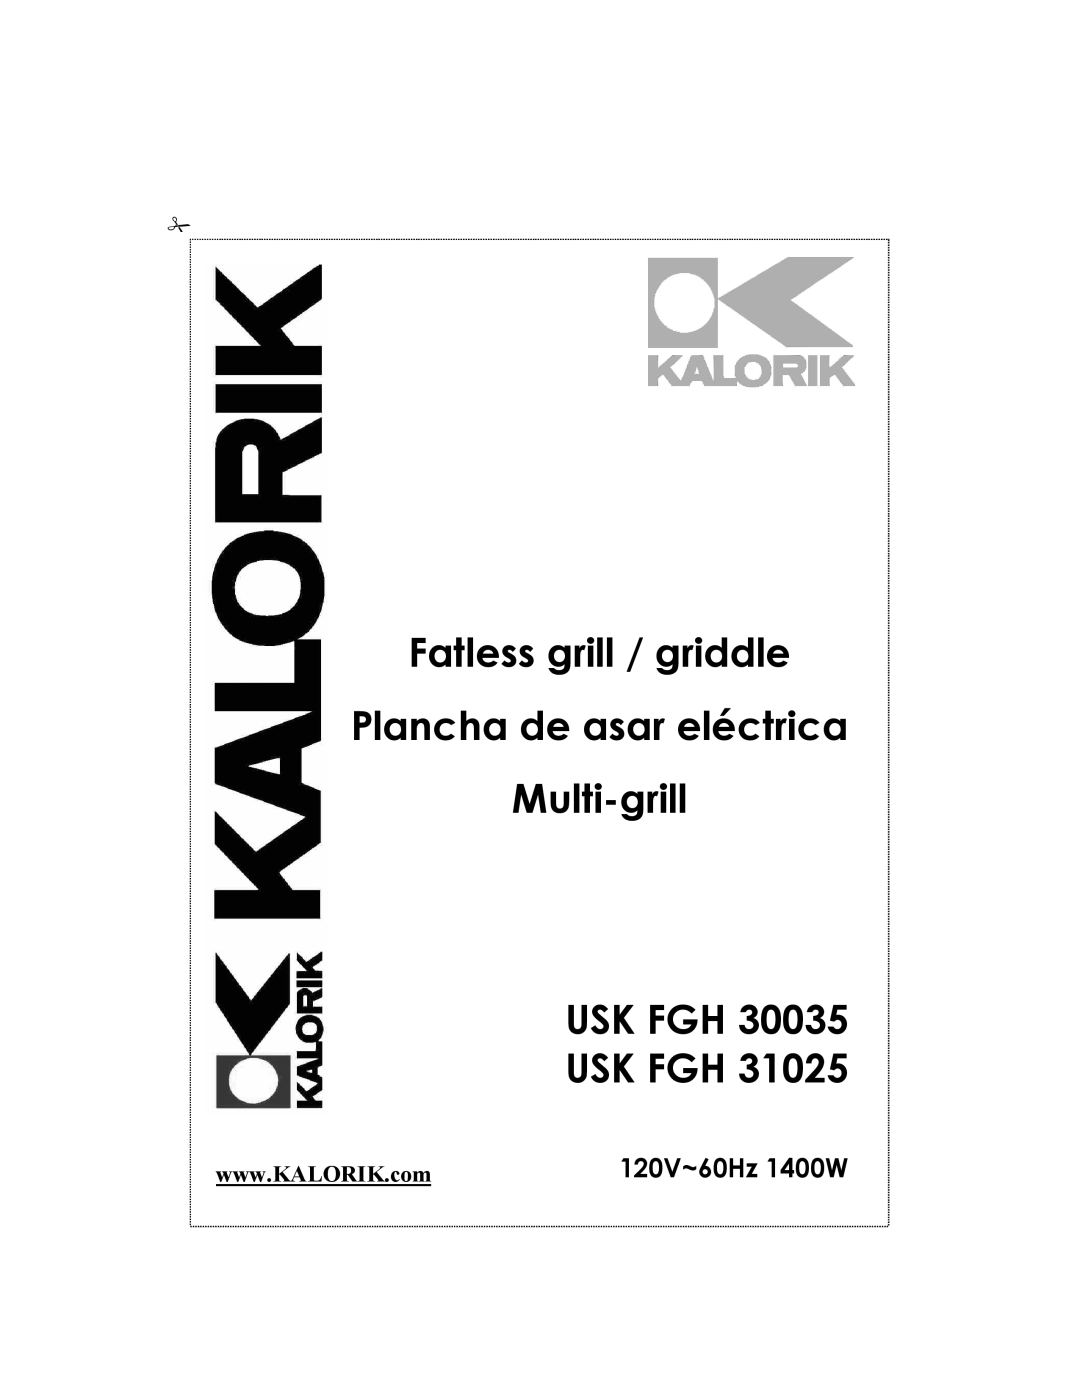 Kalorik 30035 manual Fatless grill / griddle Plancha de asar eléctrica, Multi-grill USK FGH USK FGH, 120V~60Hz 1400W 